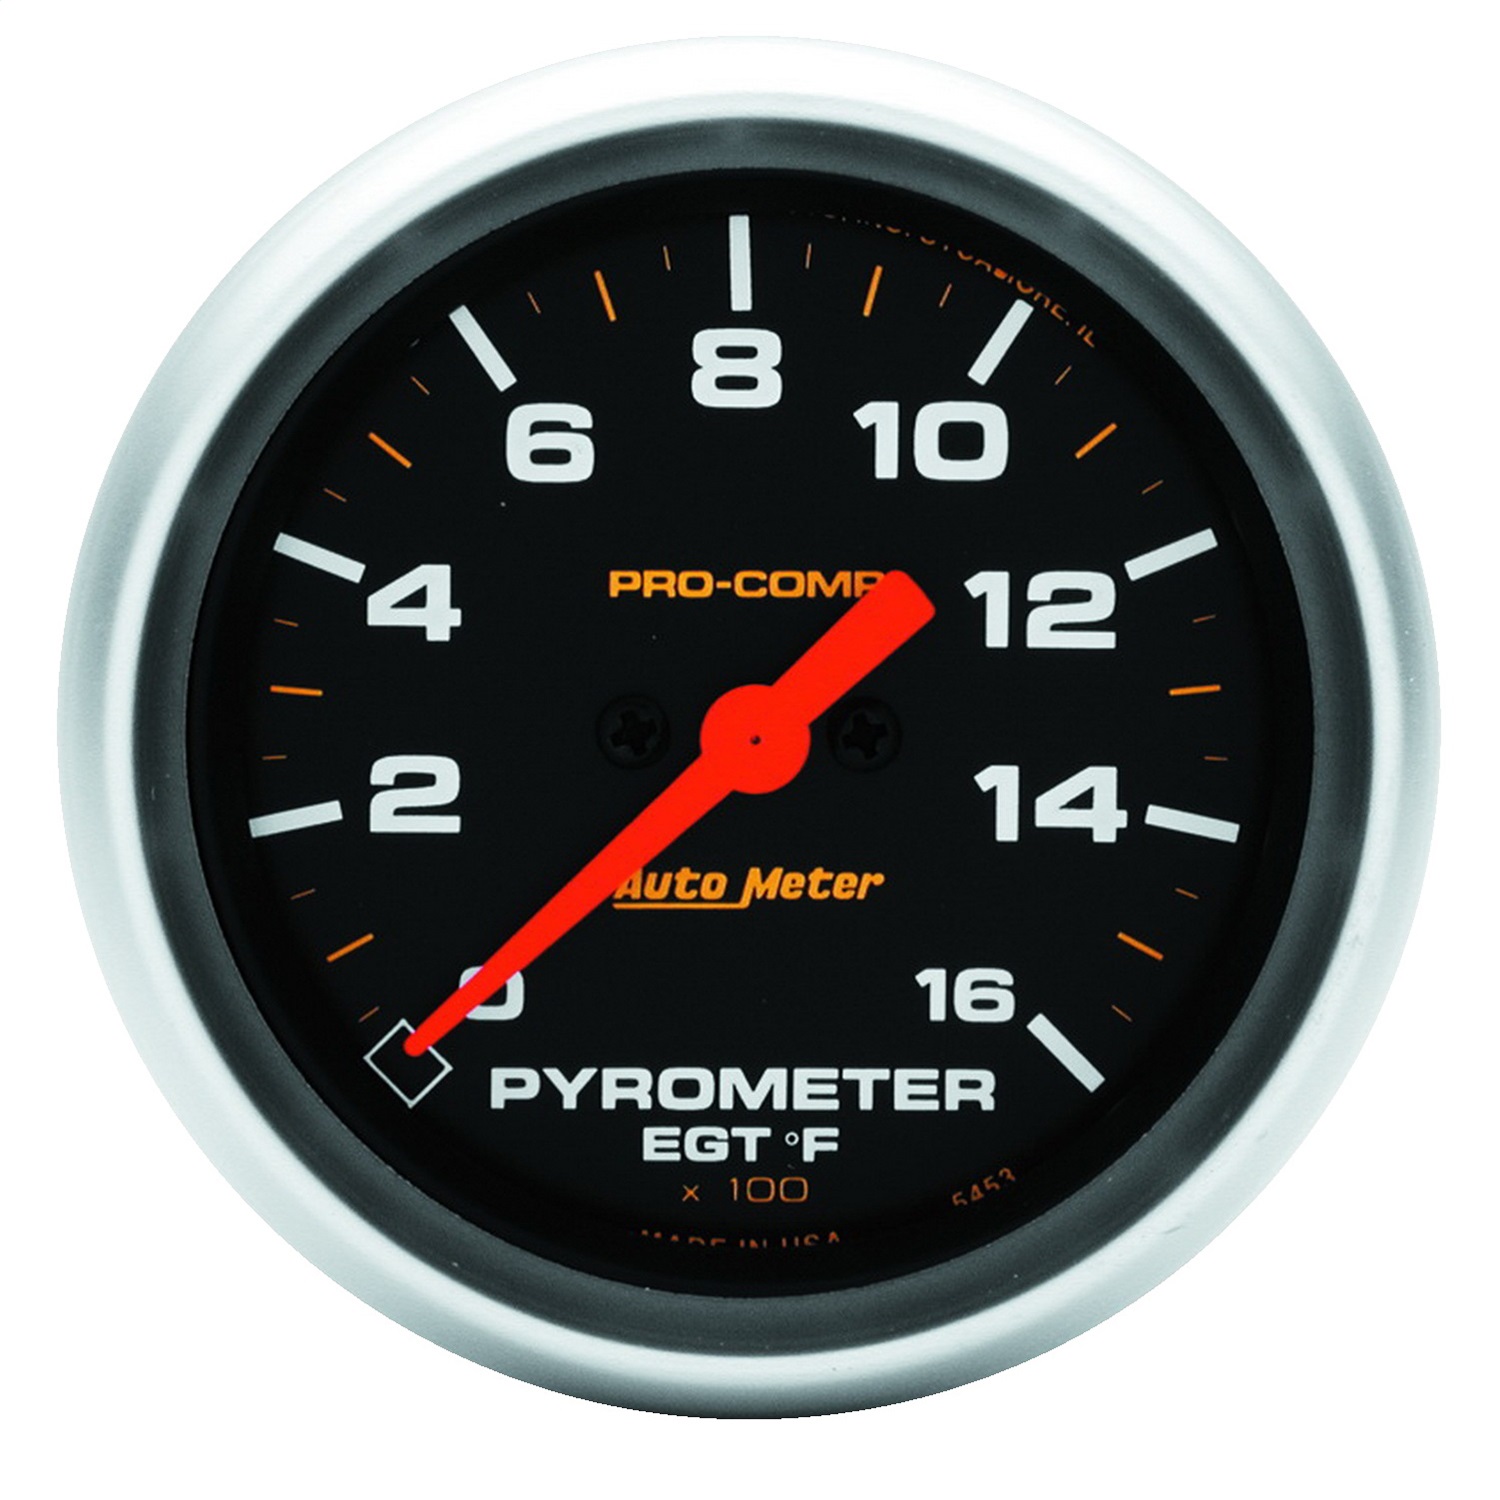 Auto Meter Auto Meter 5444 Pro-Comp; Digital Pyrometer Gauge